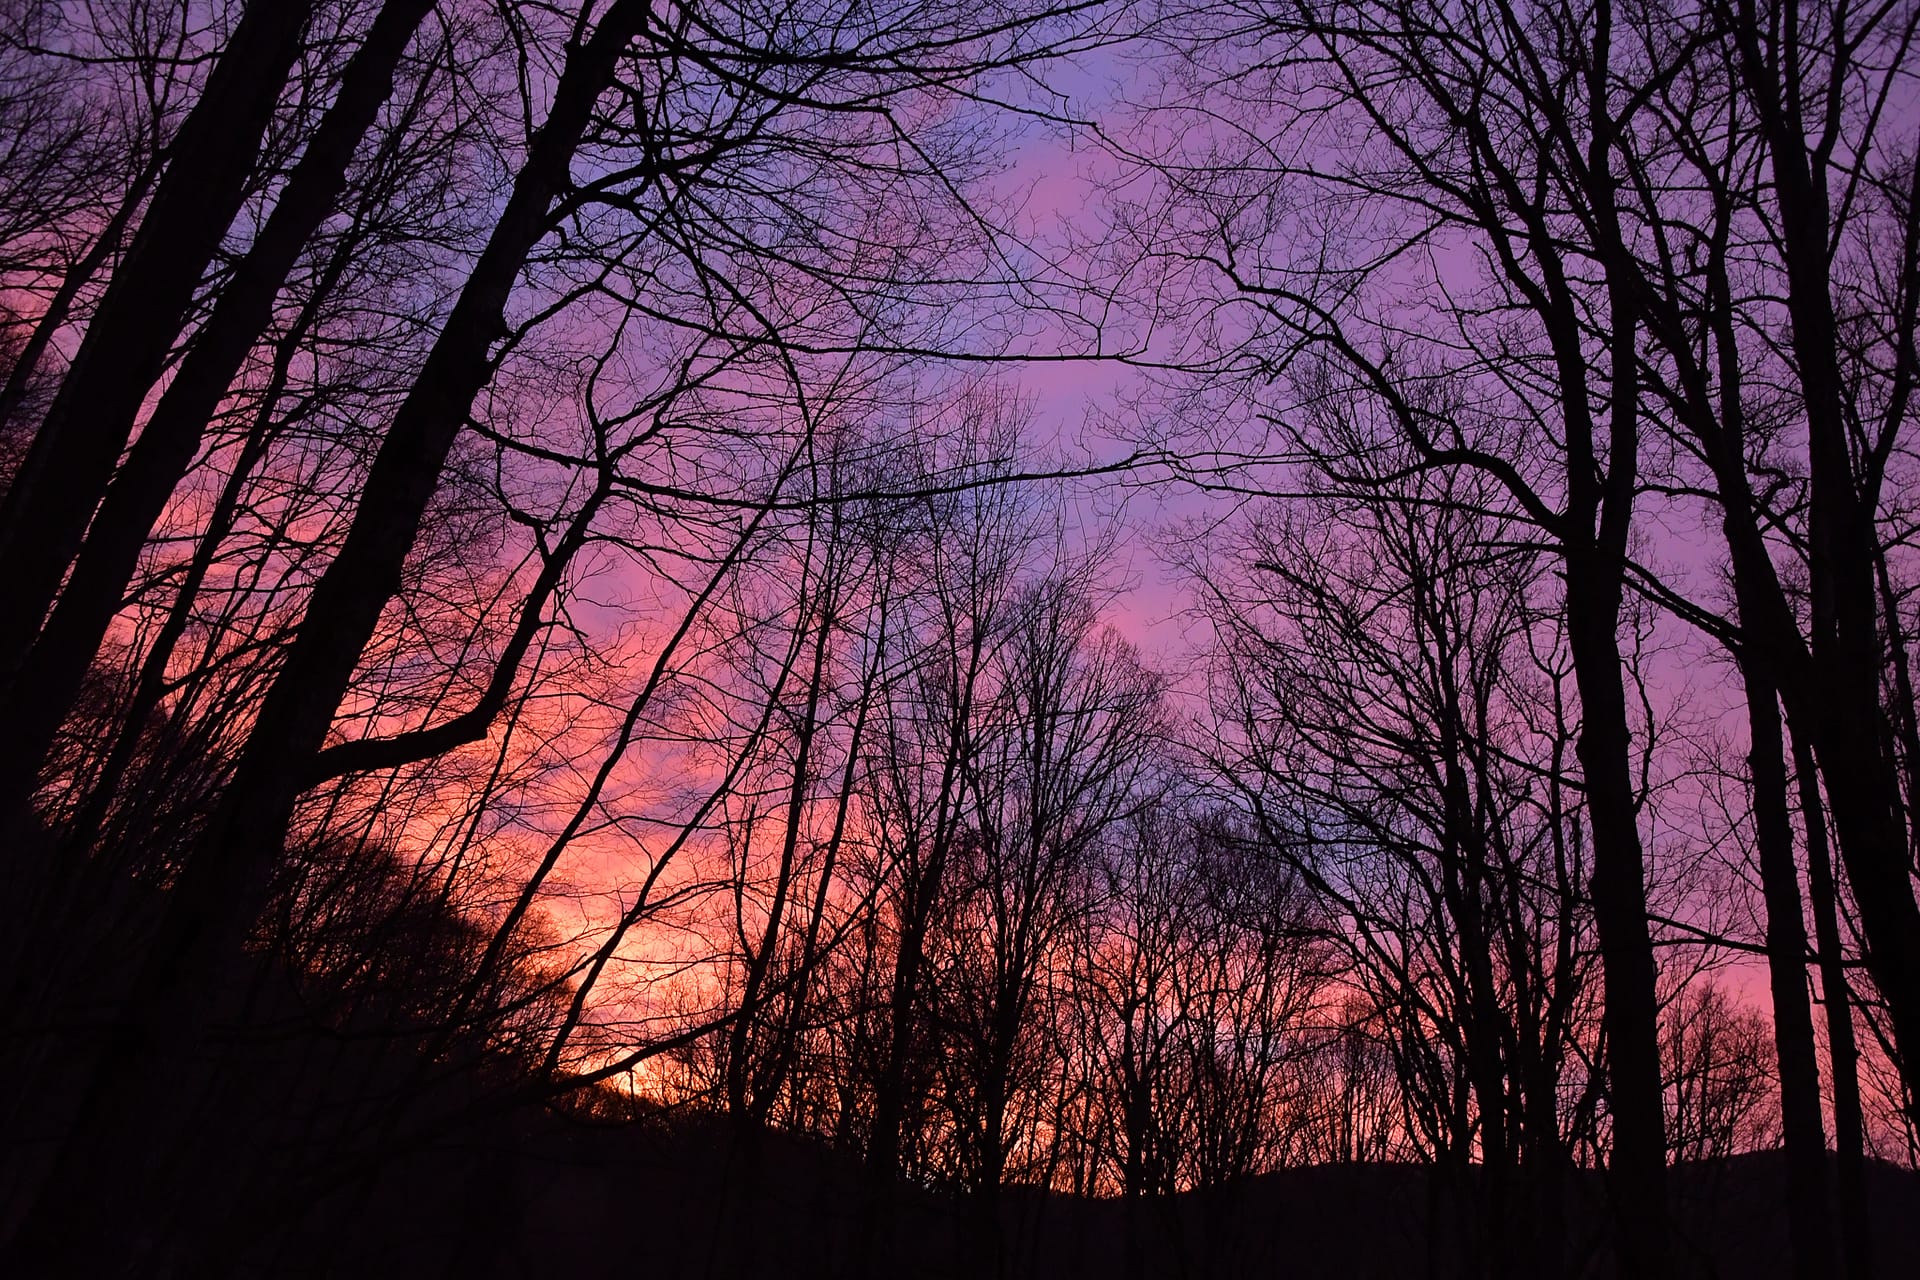 sunrise- Appalachian Ranger district
